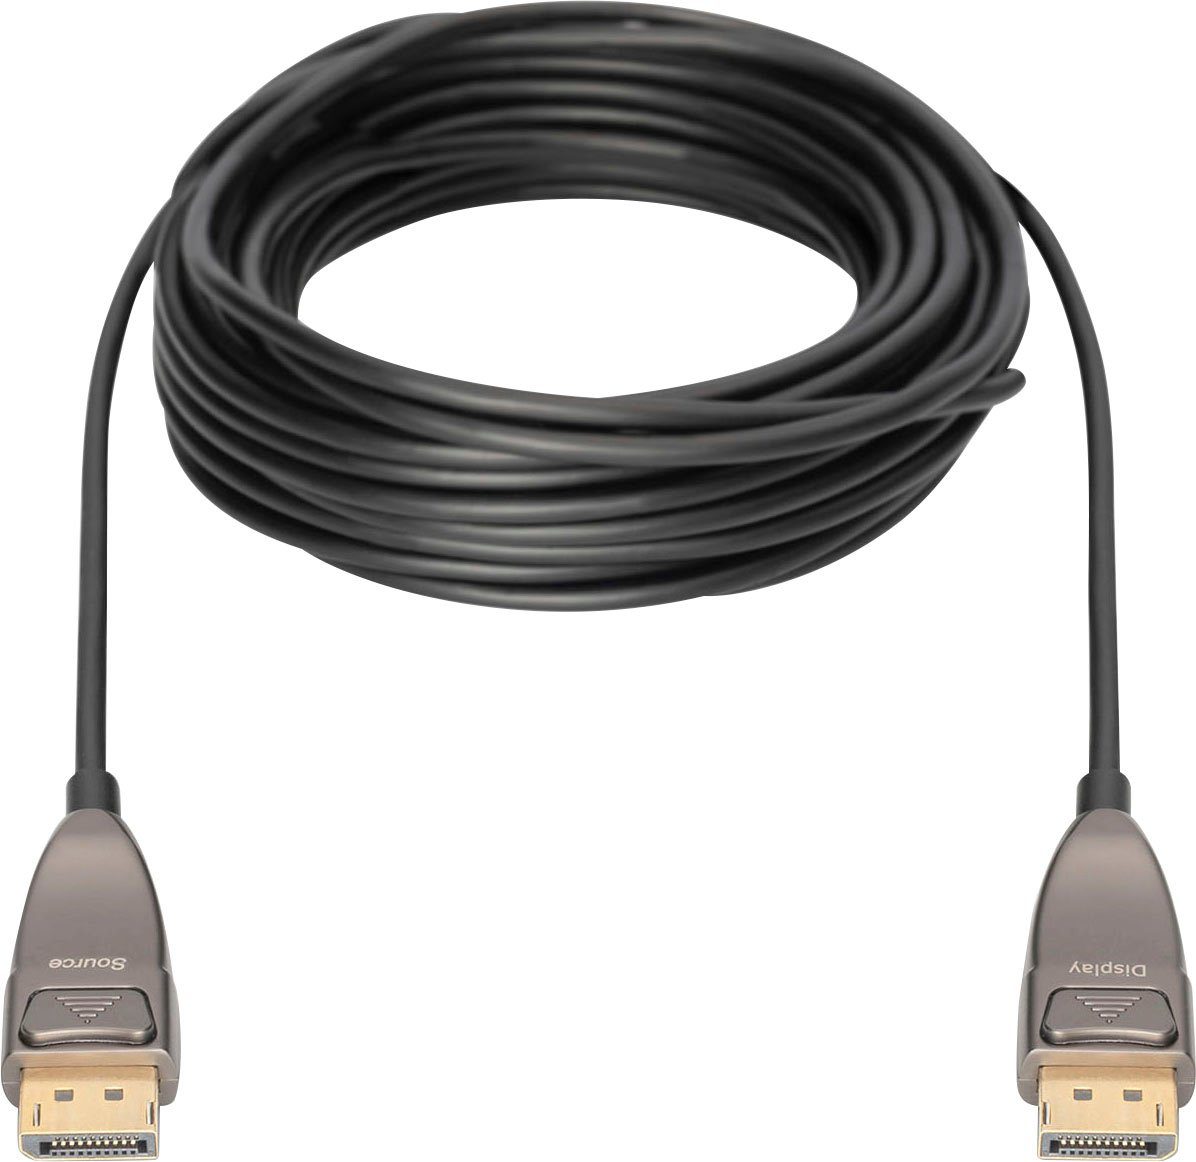 8K UHD DisplayPort™ DisplayPort cm) AOC Hybrid Glasfaserkabel, (1500 SAT-Kabel, Digitus